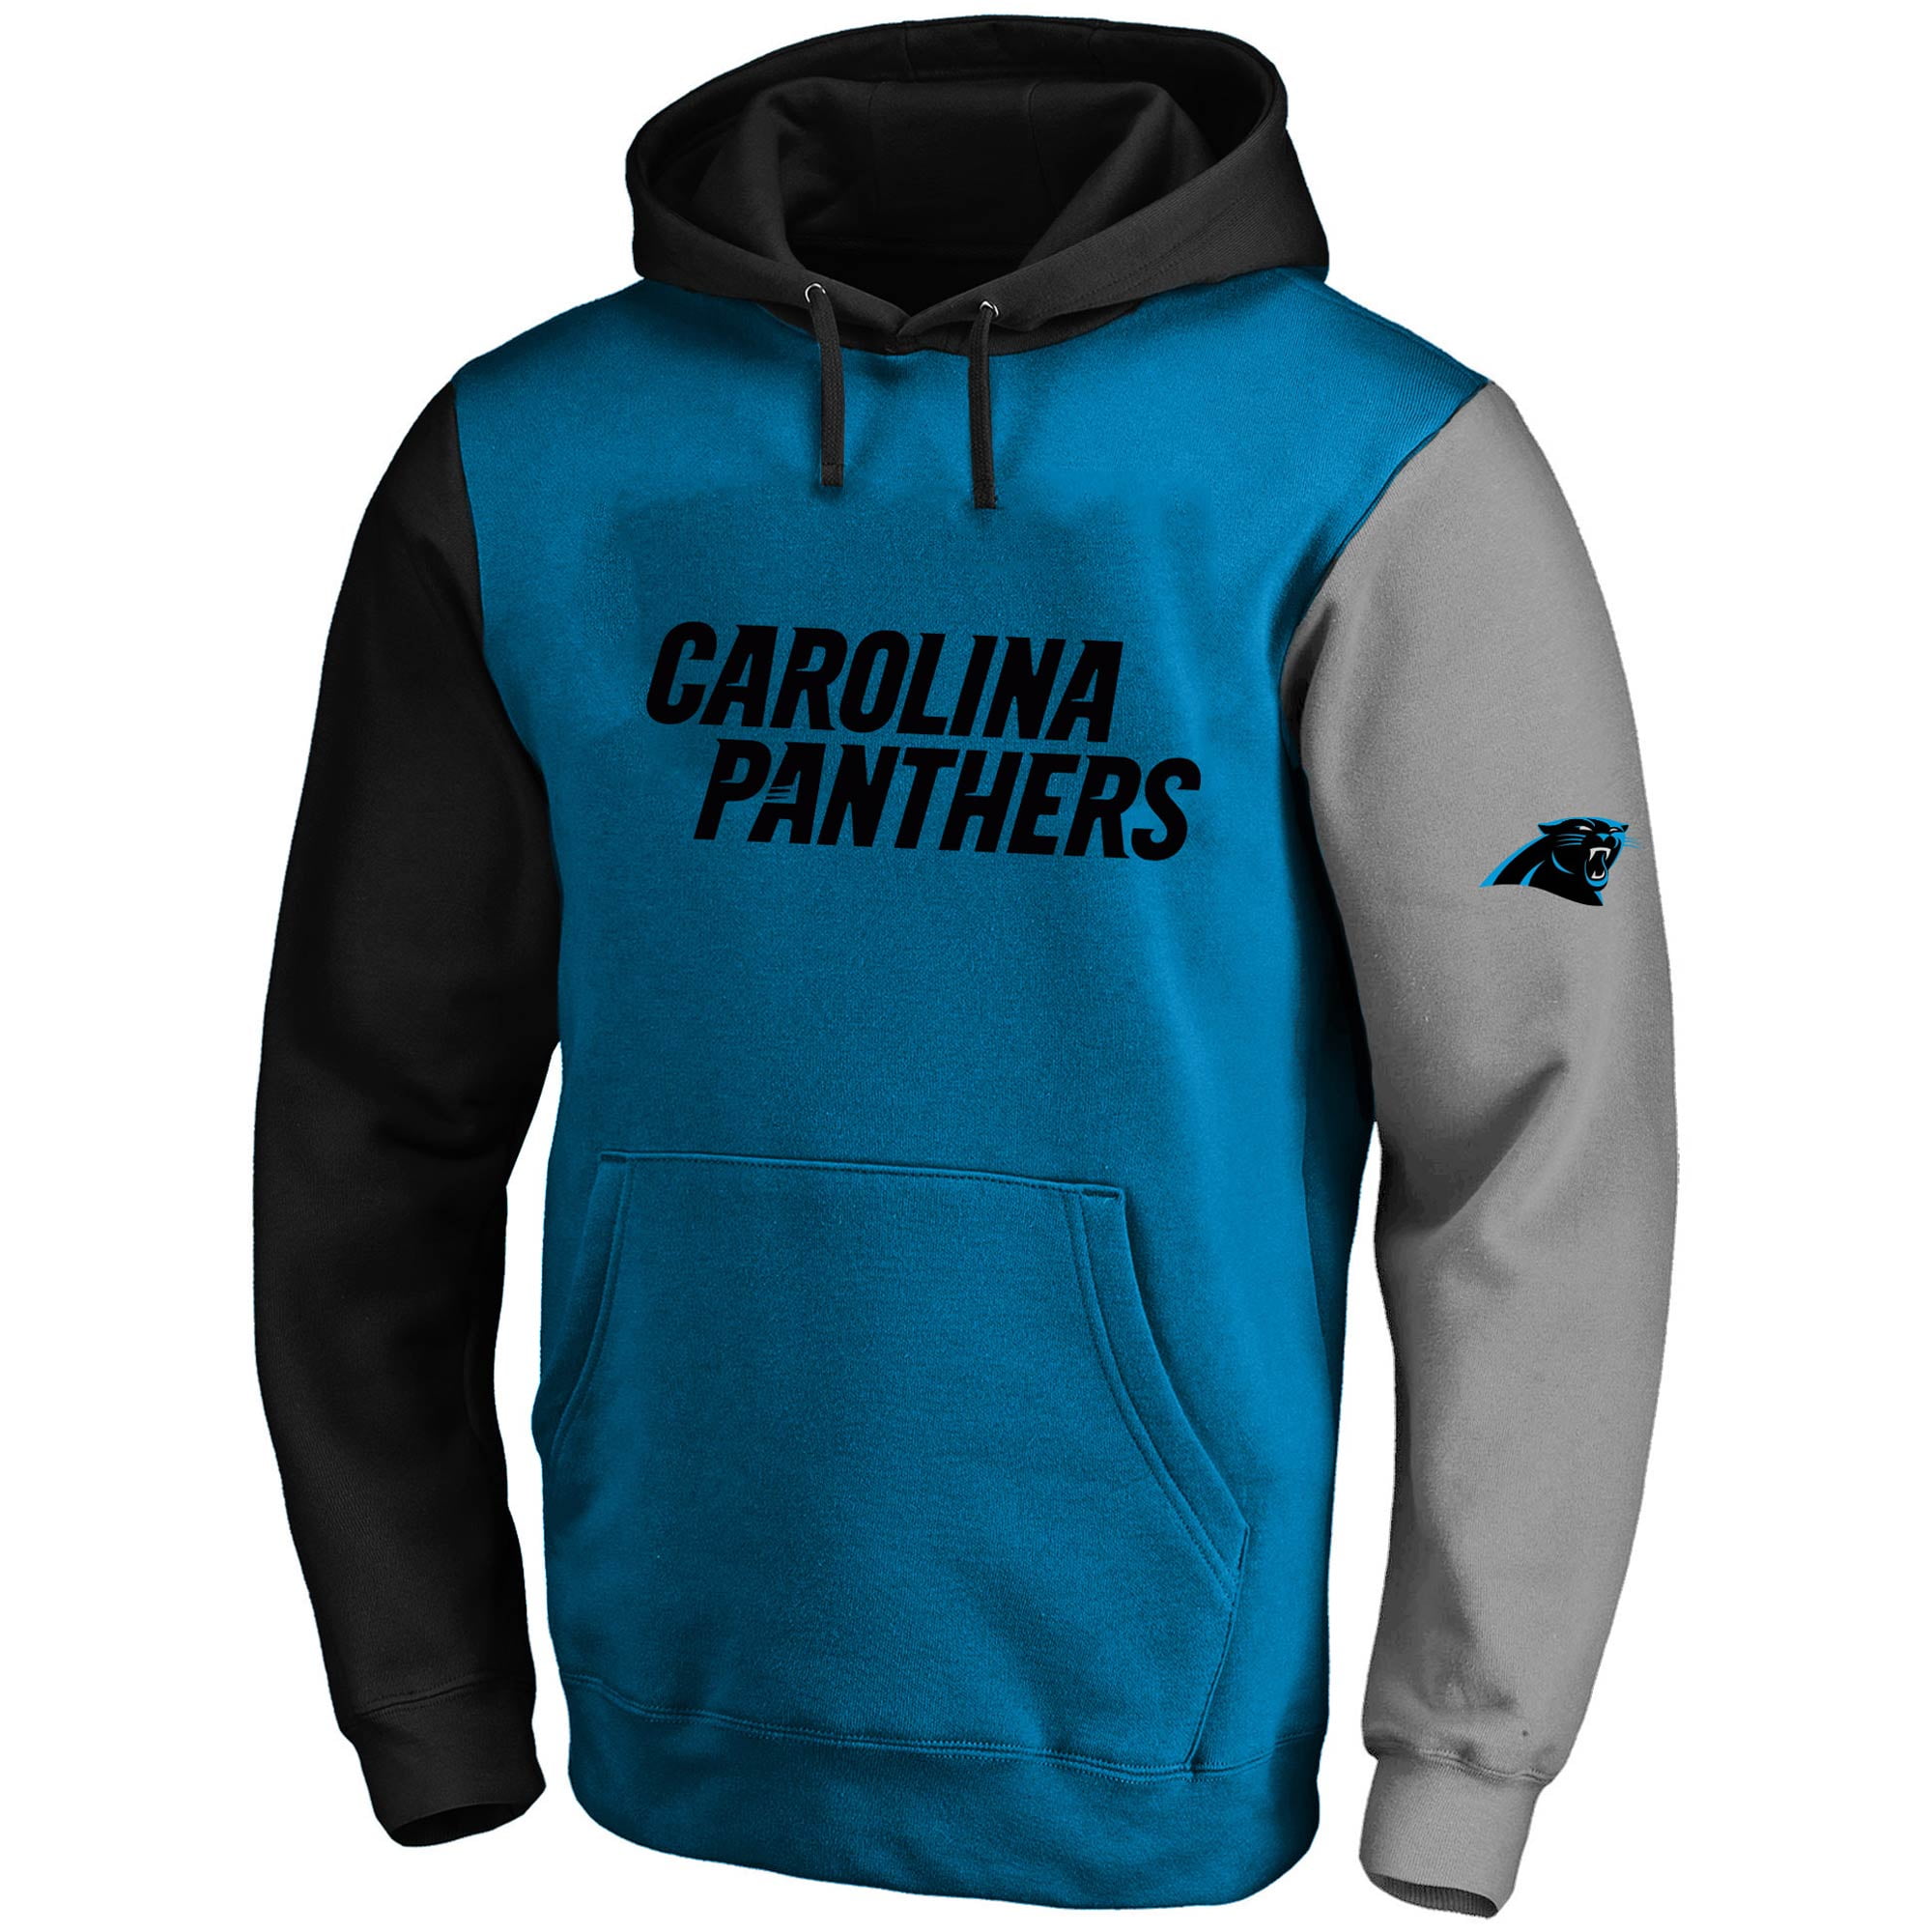 Carolina Panthers Sweatshirts - Walmart.com